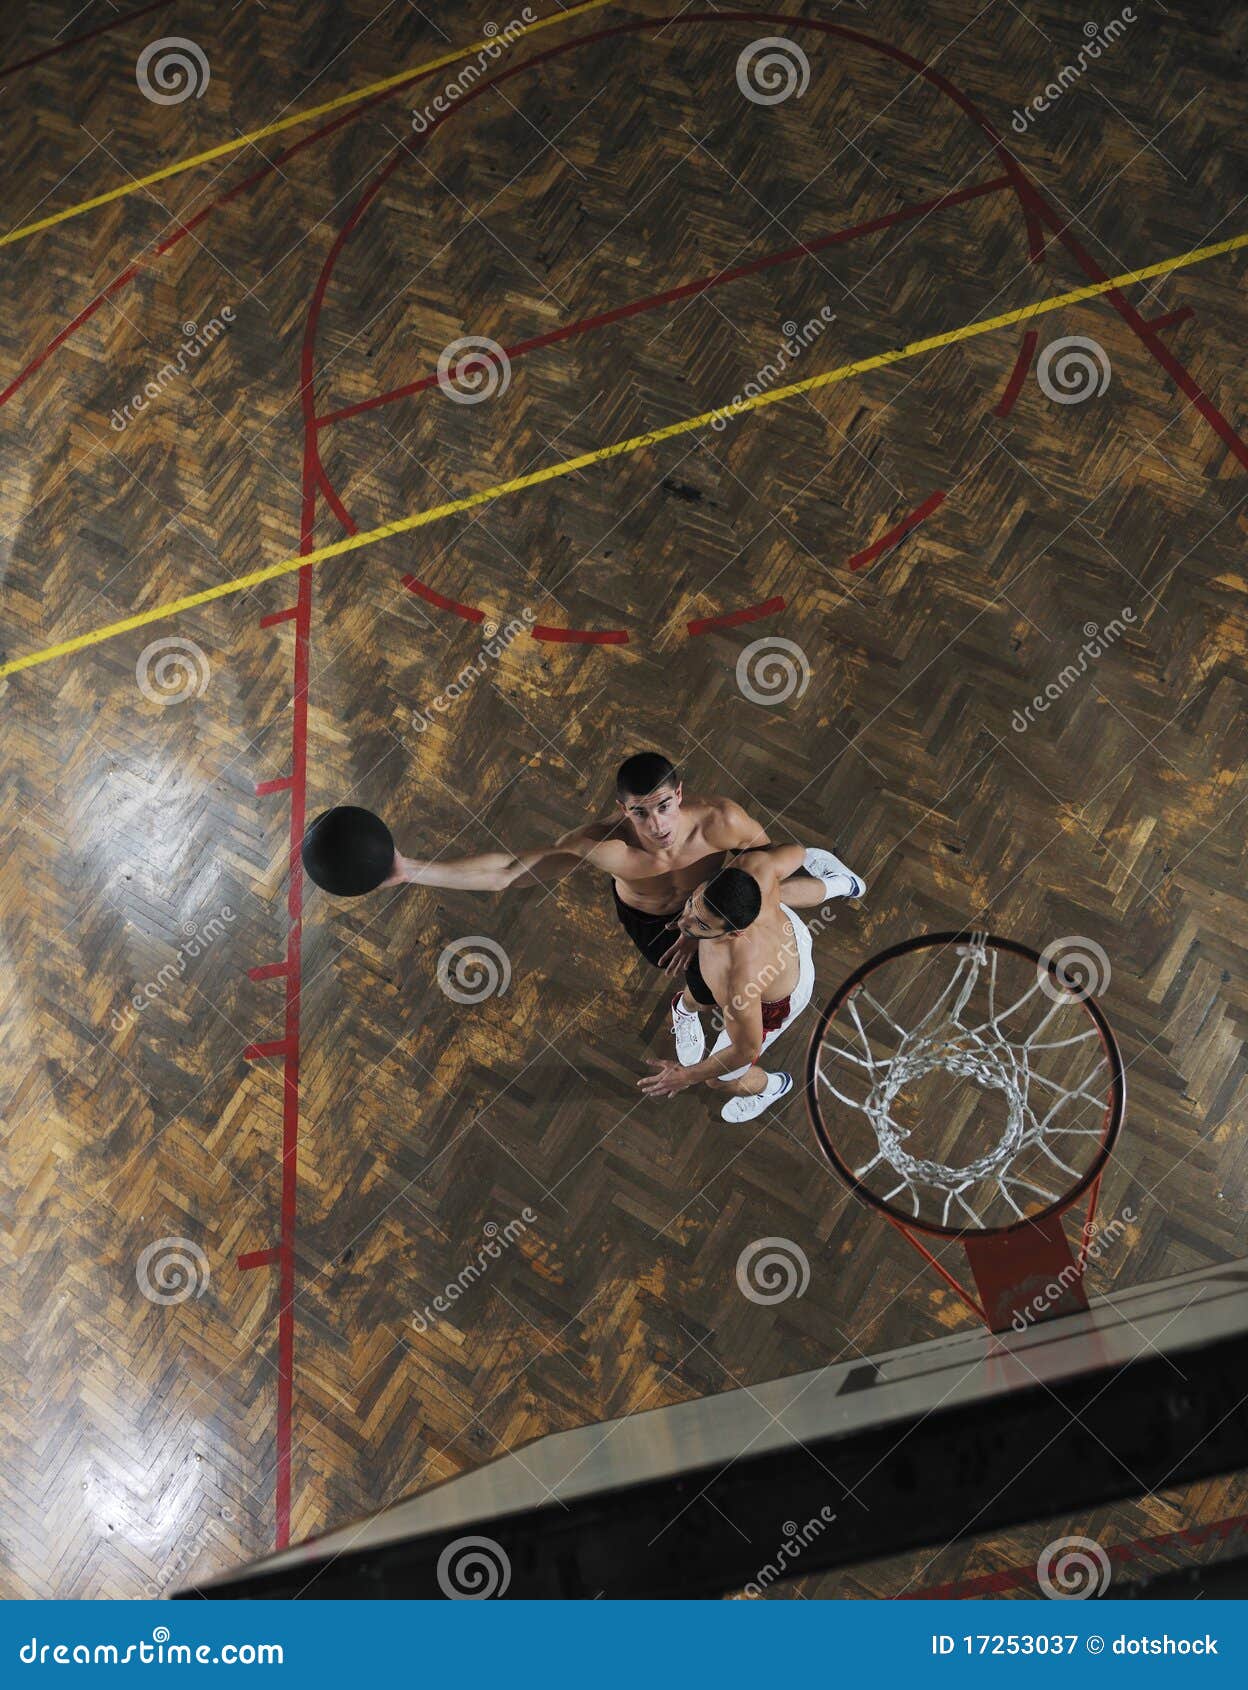 Magic basketball stock image. Image of basketball, indoor - 17253037